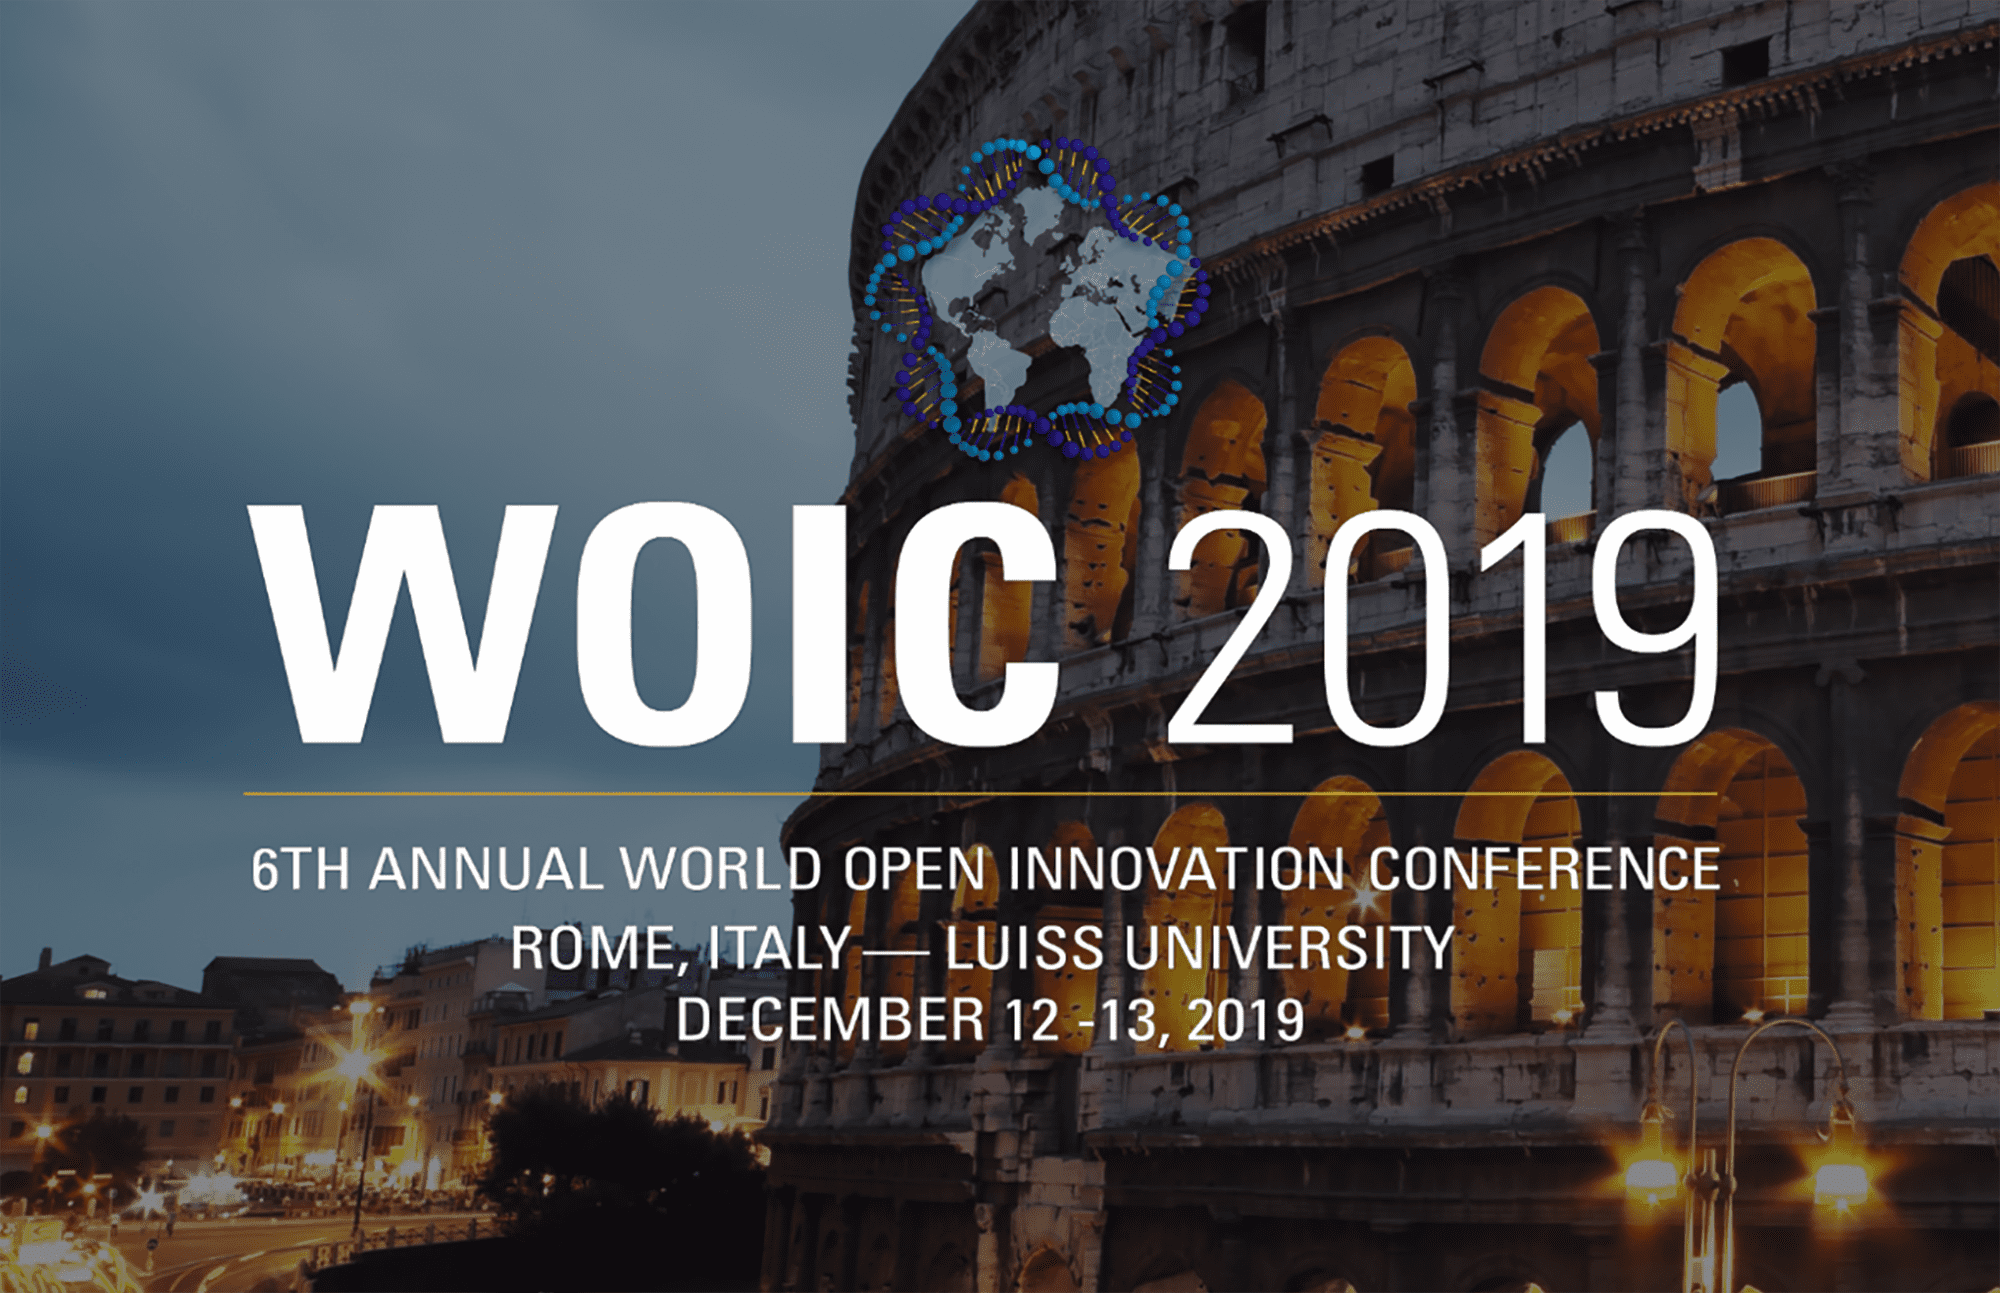 World Open Innnovation Conference 2019 logo